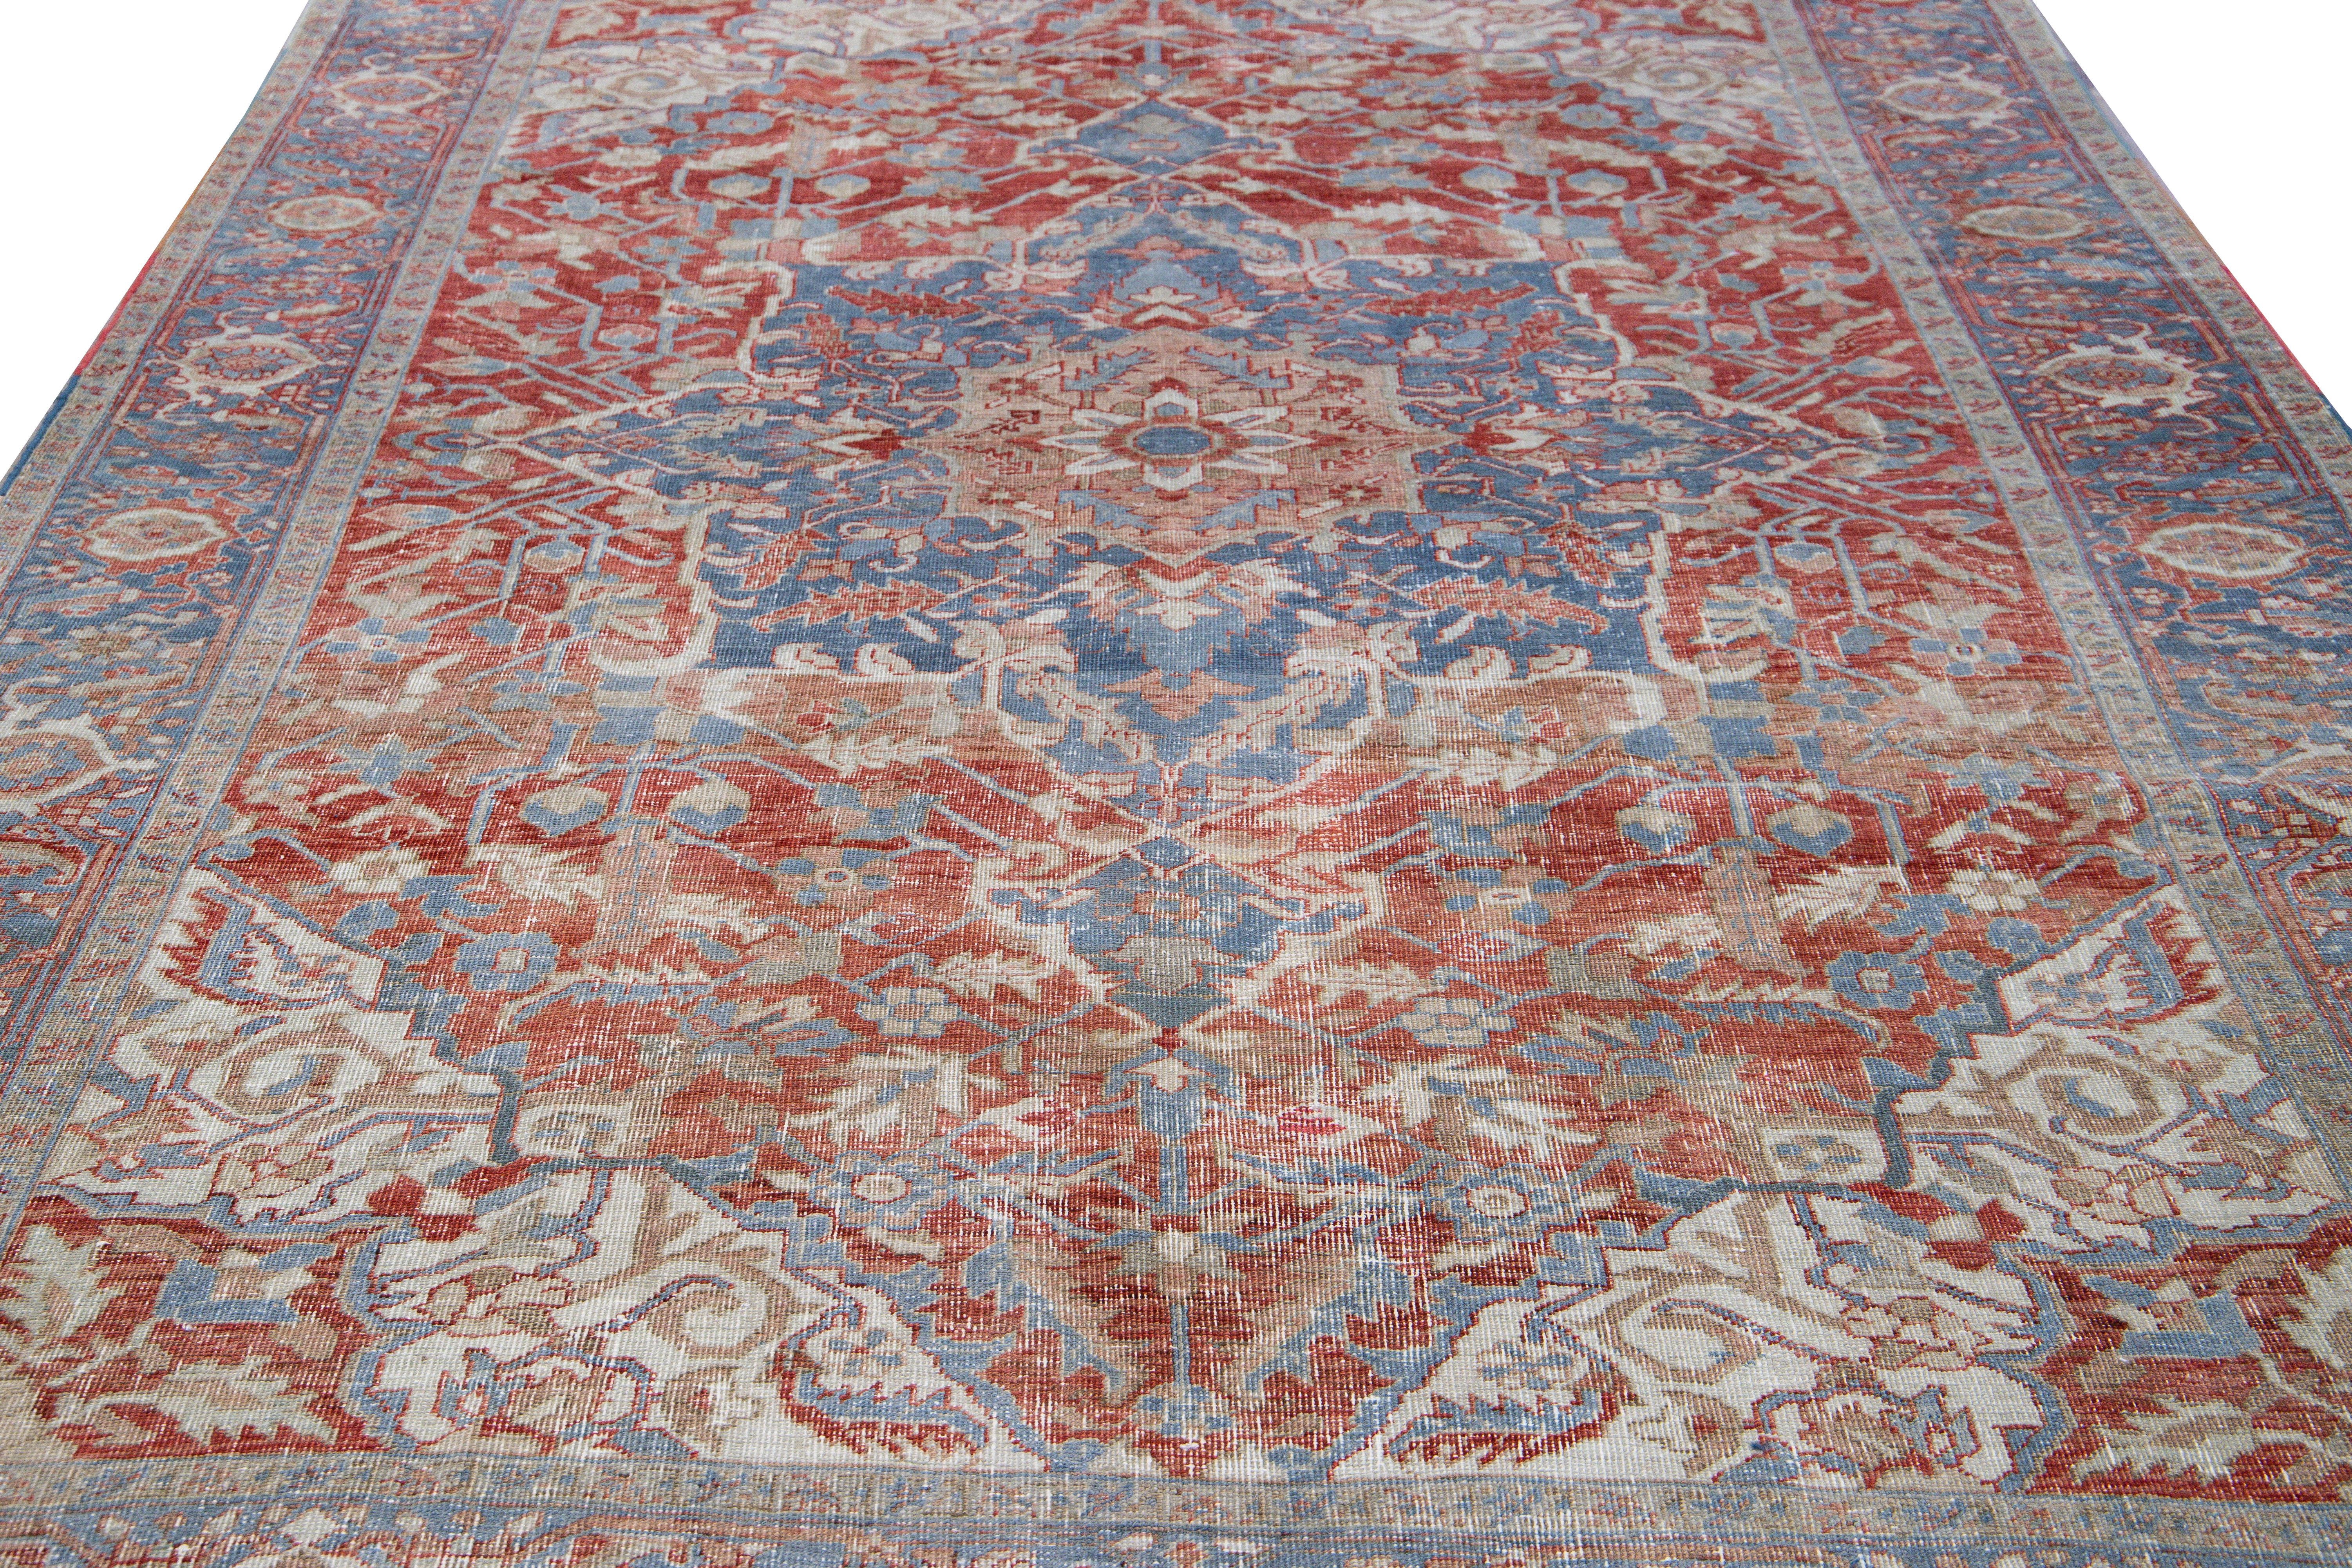 Heriz Serapi Antique Persian Heriz Handmade Red and Blue Medallion Floral Wool Rug For Sale